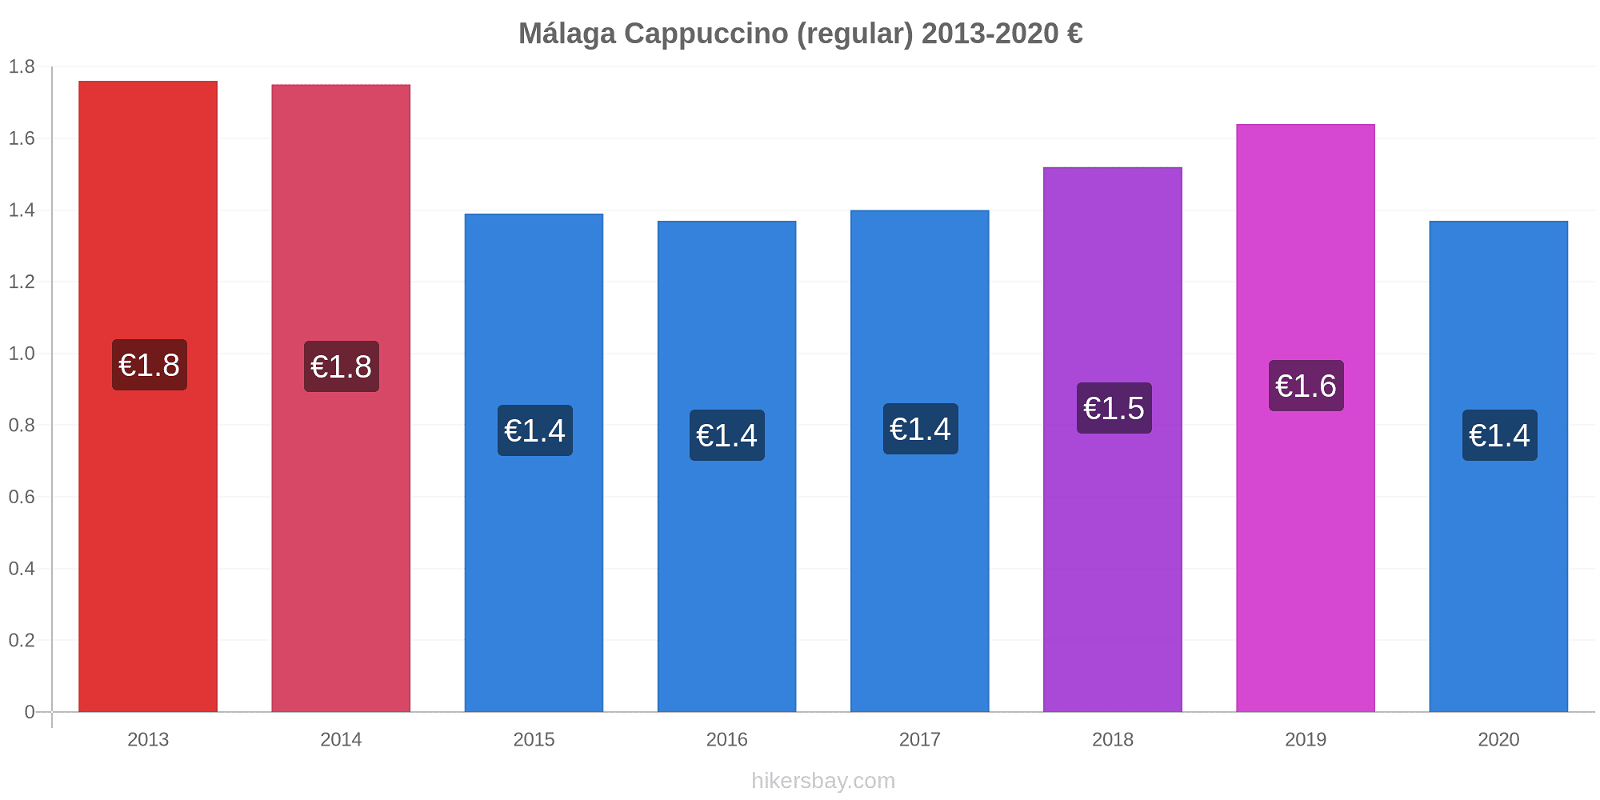 Málaga price changes Cappuccino (regular) hikersbay.com